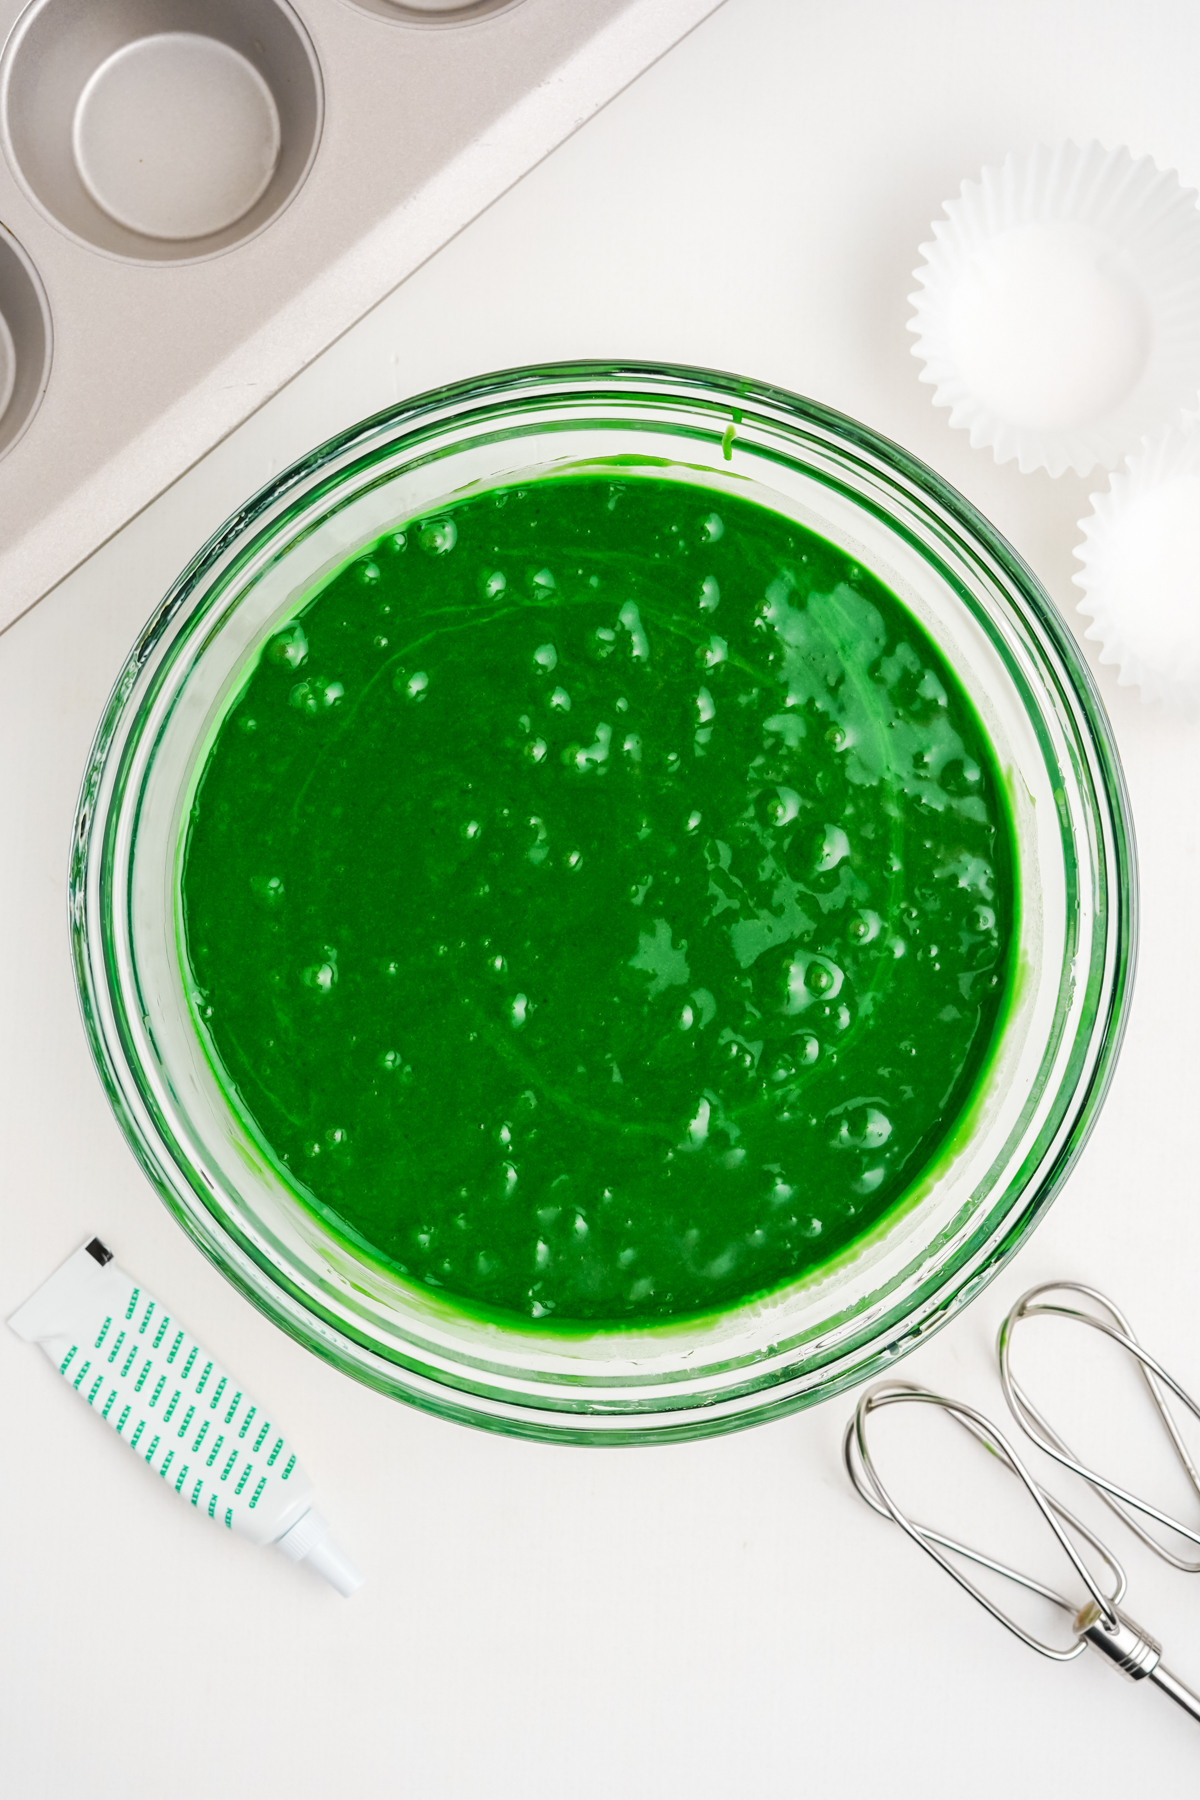 green velvet cupcakes in a glass bowl